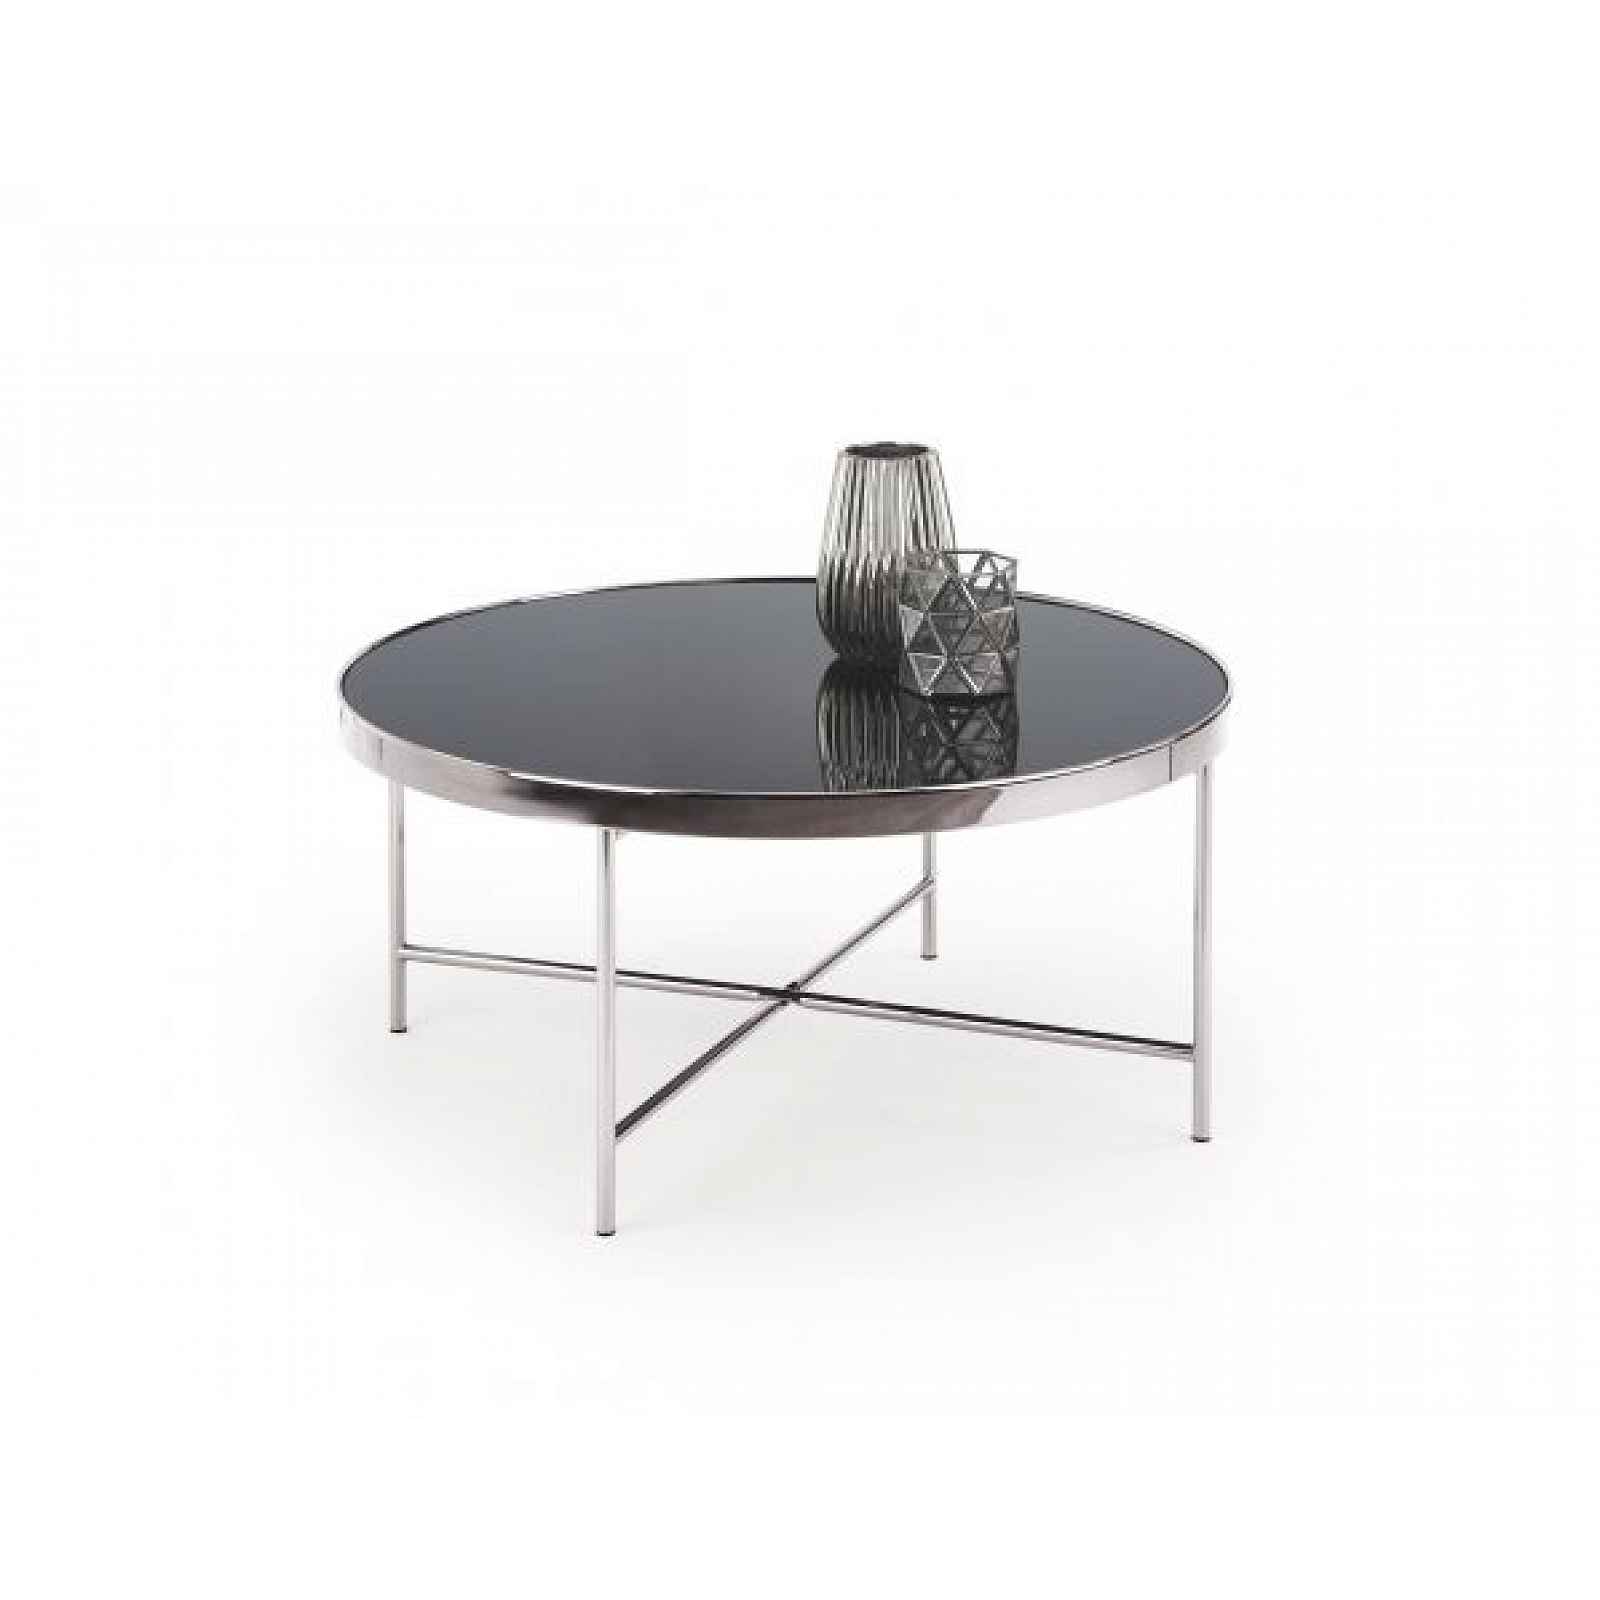 Konferenční stůl Moria sklo/chrom, stříbrná